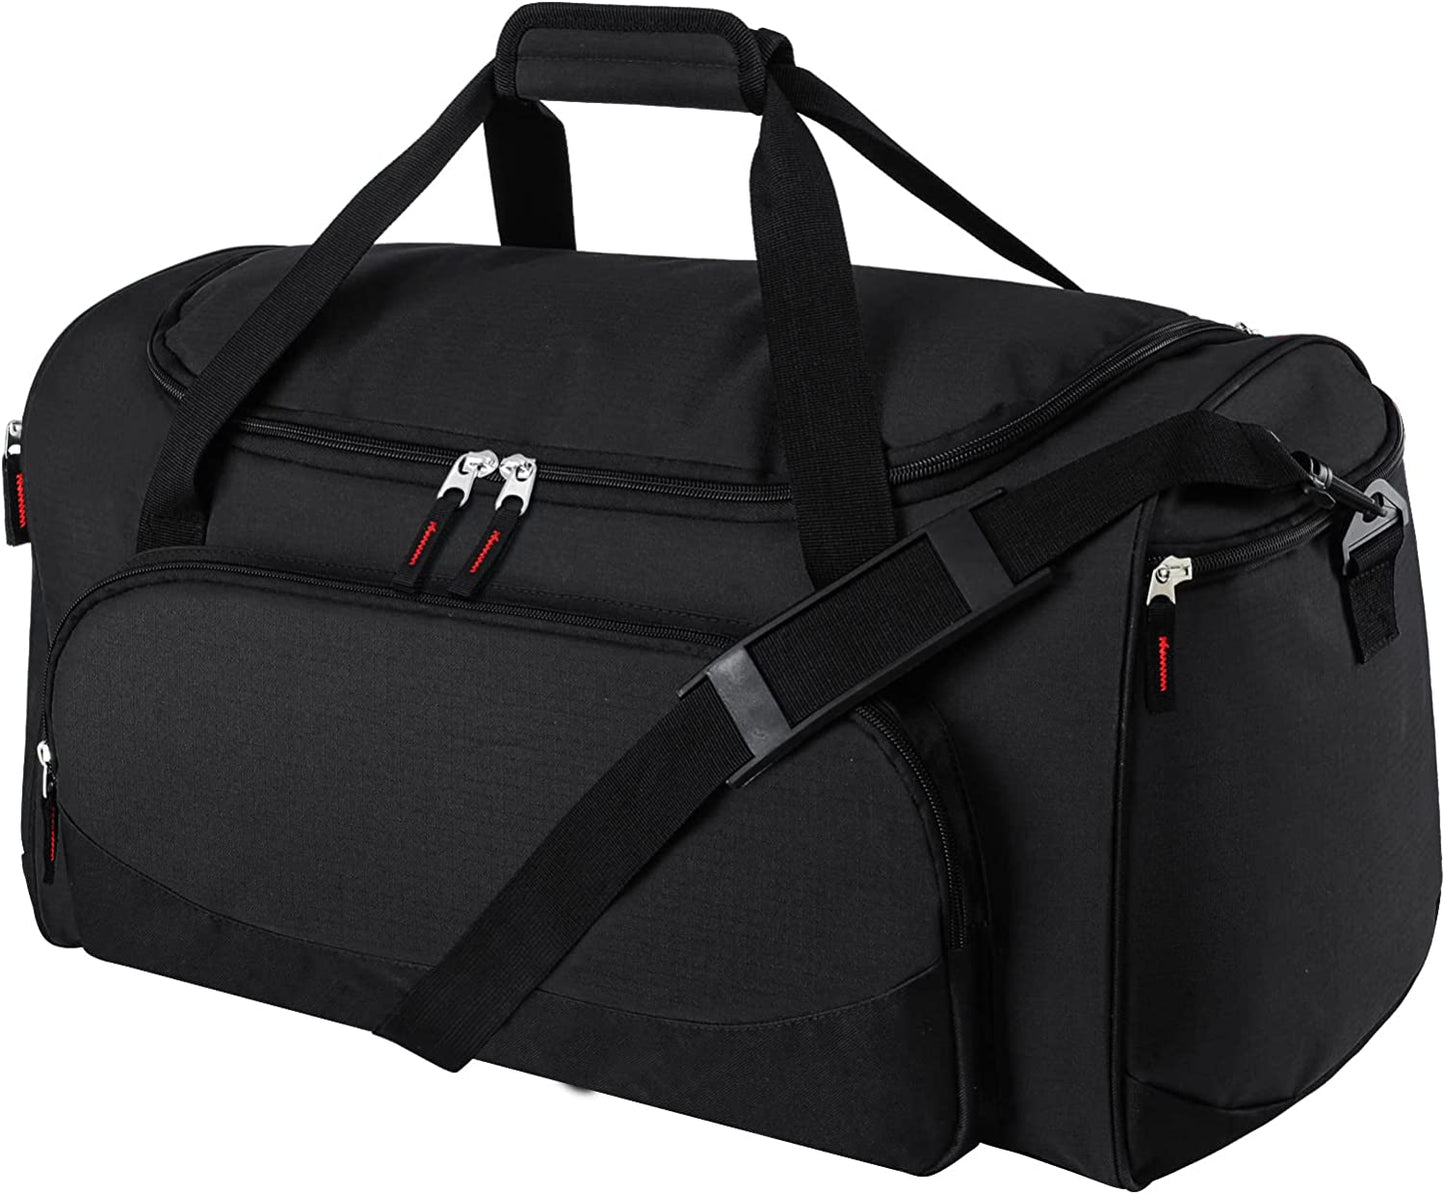 Gym Bag for Men Women Large Sports Duffle Bags 55L Travel Duffel Bag Navy Blue